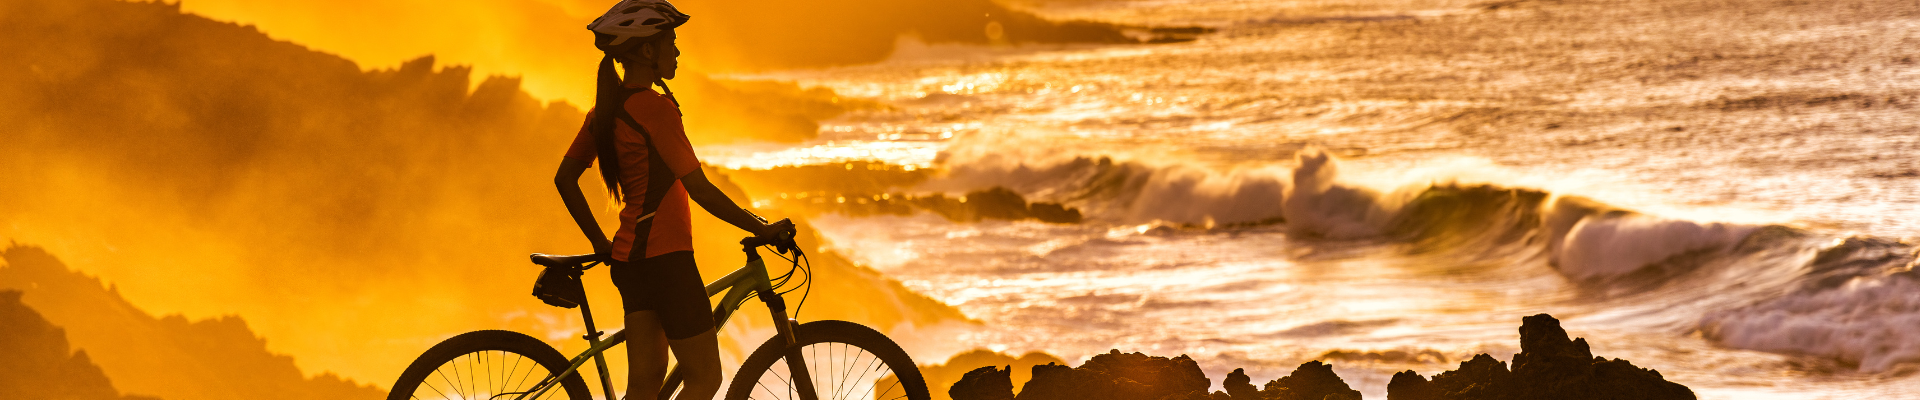 Transaid Cycle Challenge: Your choice - Cycle Kenya or Cycle Newcastle to Edinburgh